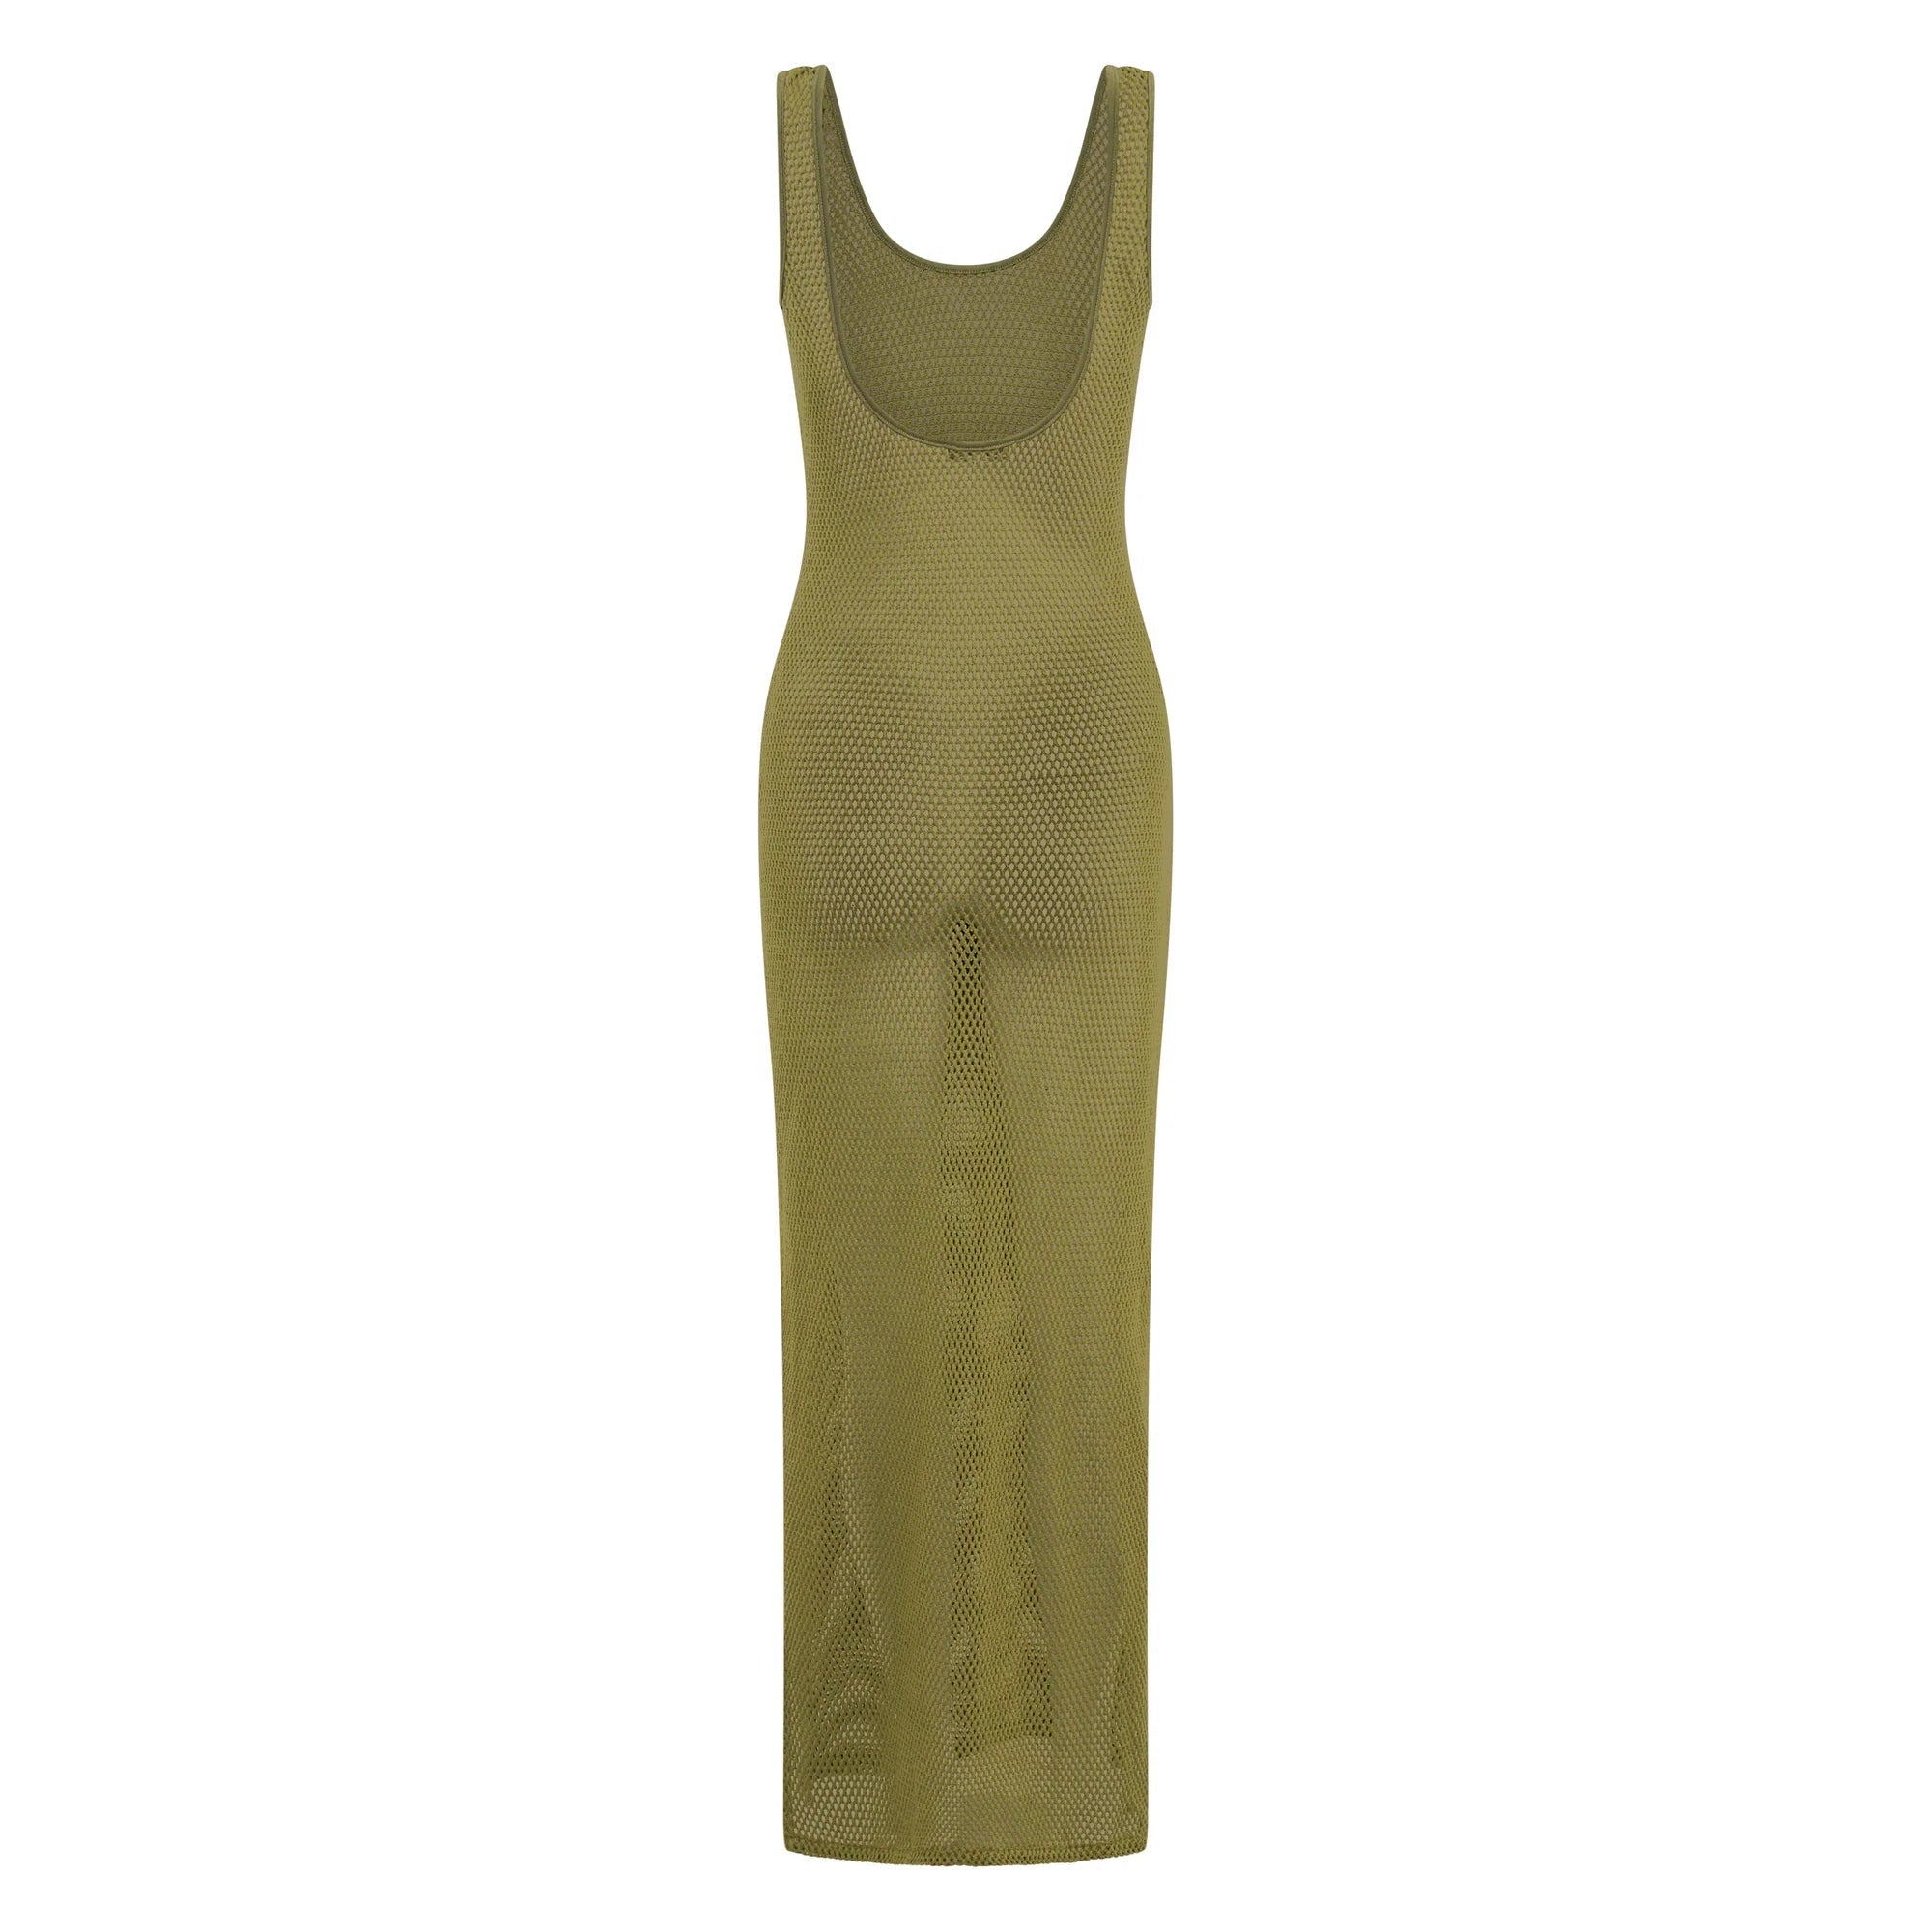 Shop Babylon Netted Cotton Dress | Pistachio Green - Arms Of Eve